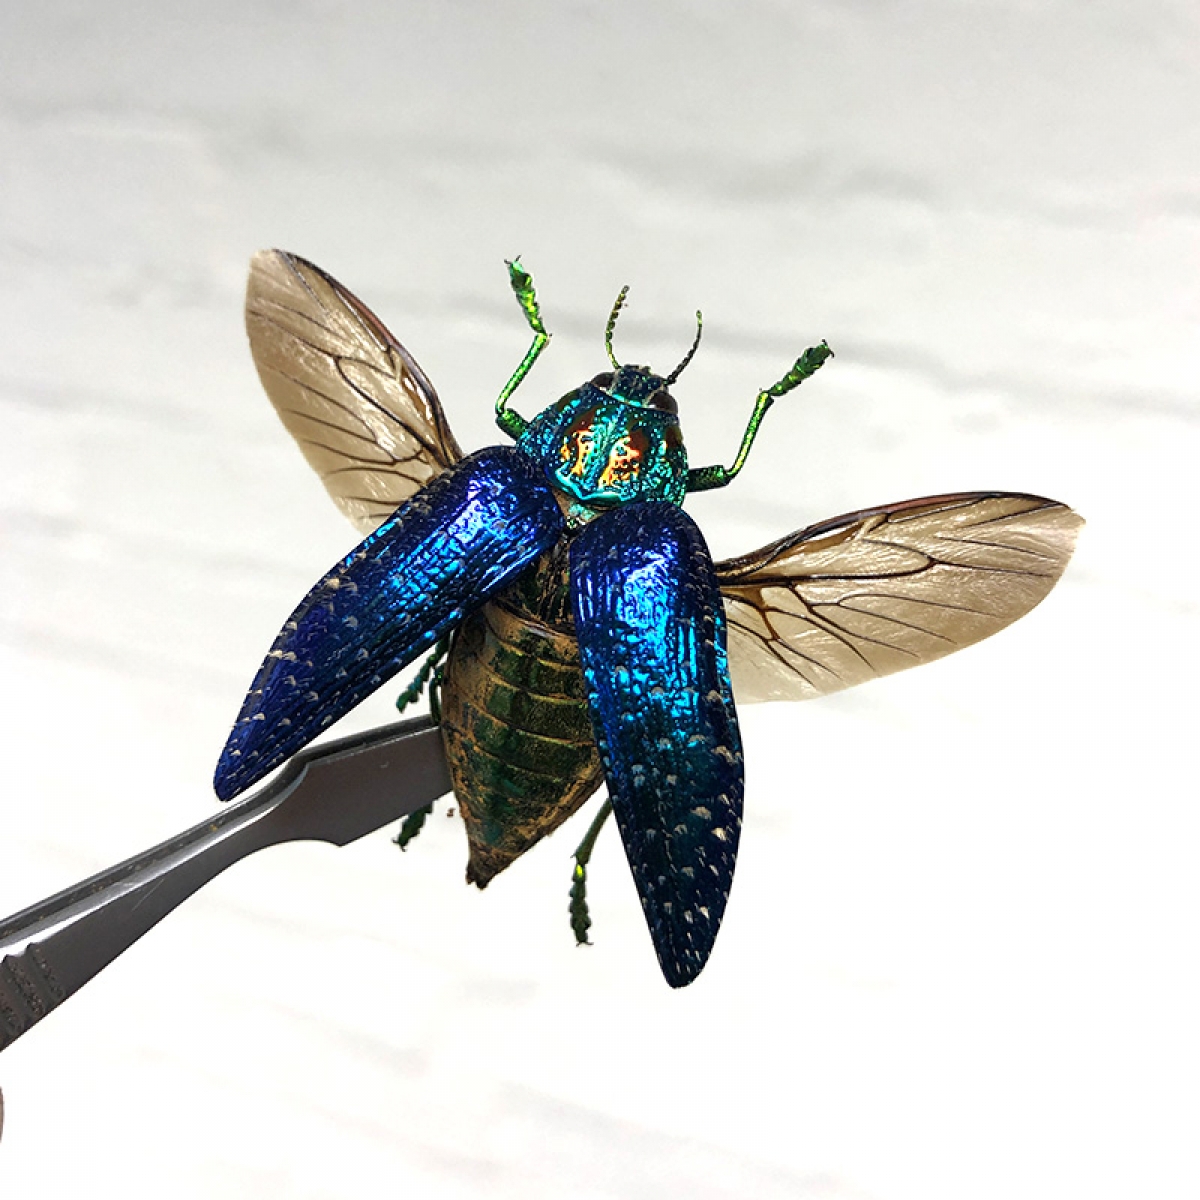 Malagasy Jewel Beetle in Box Frame (Polybothris sumptuosa)